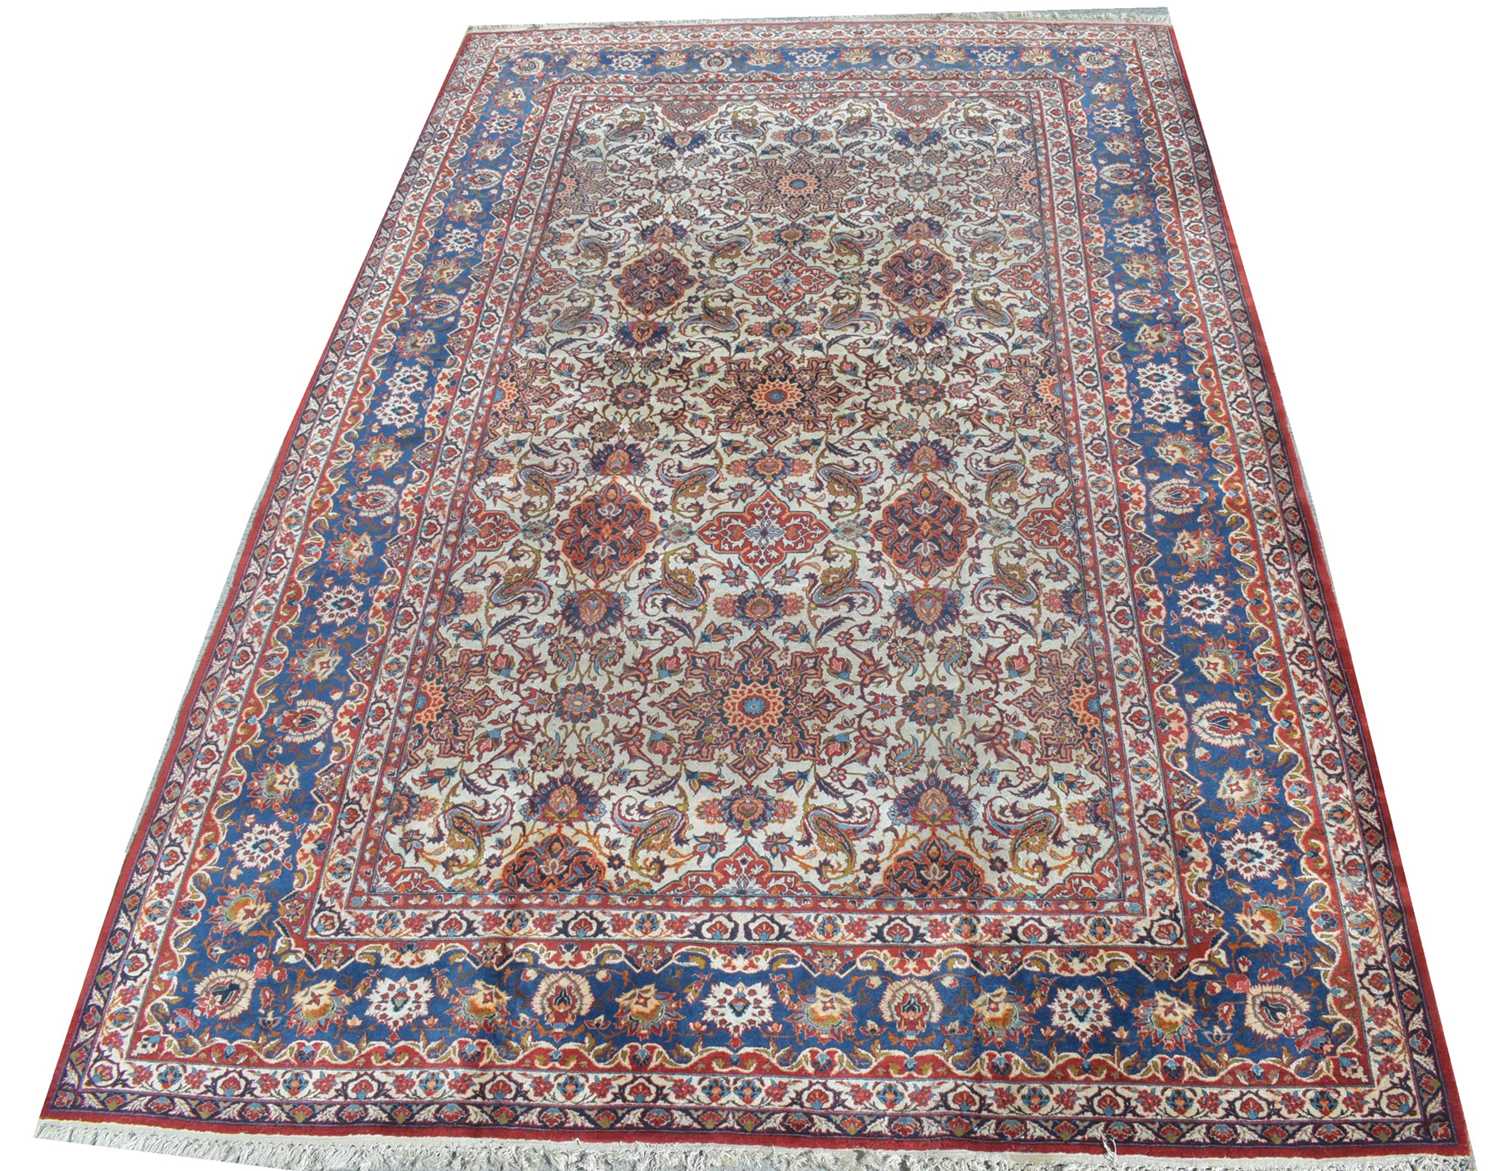 Lot 881 Isfahan Carpet